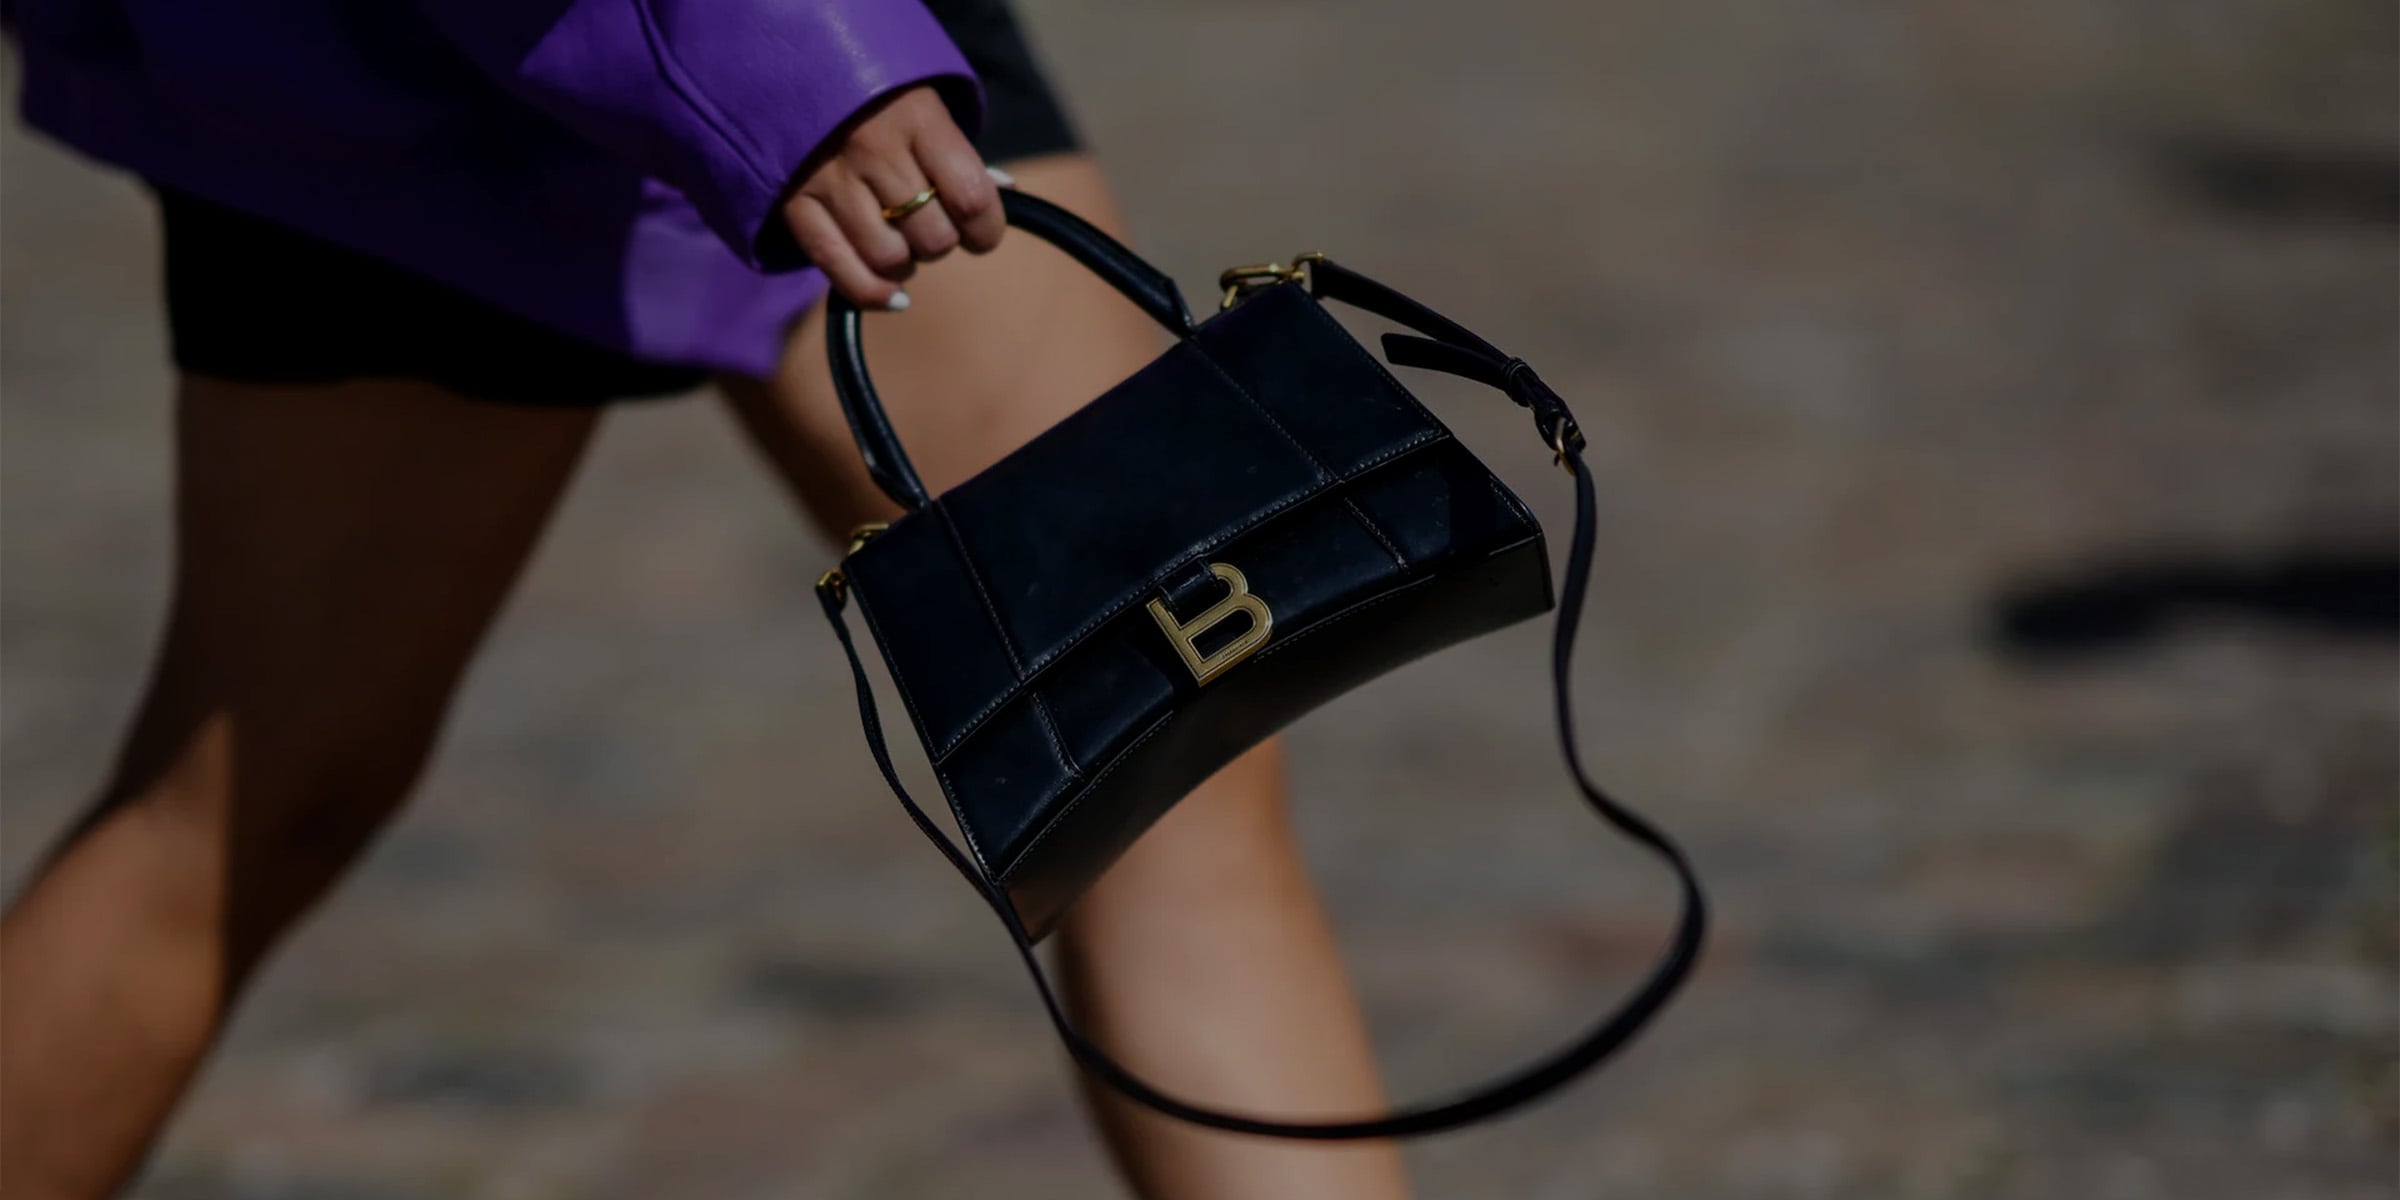 Paris Hilton's Got a $2250 Beach Bag